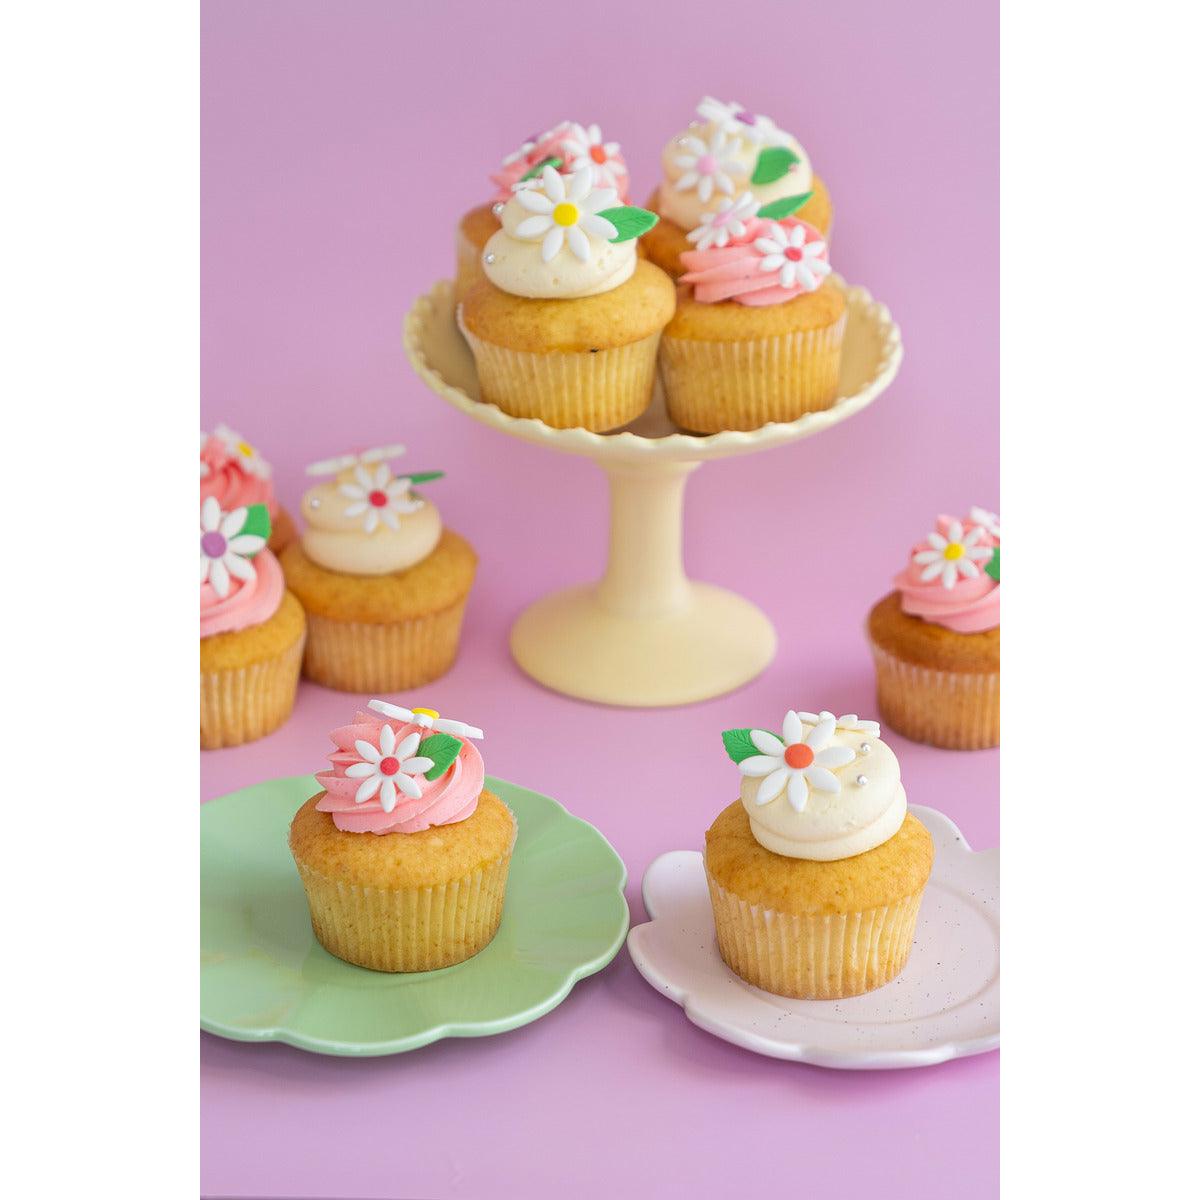 Daisy Cupcakes - Little Cupcakes